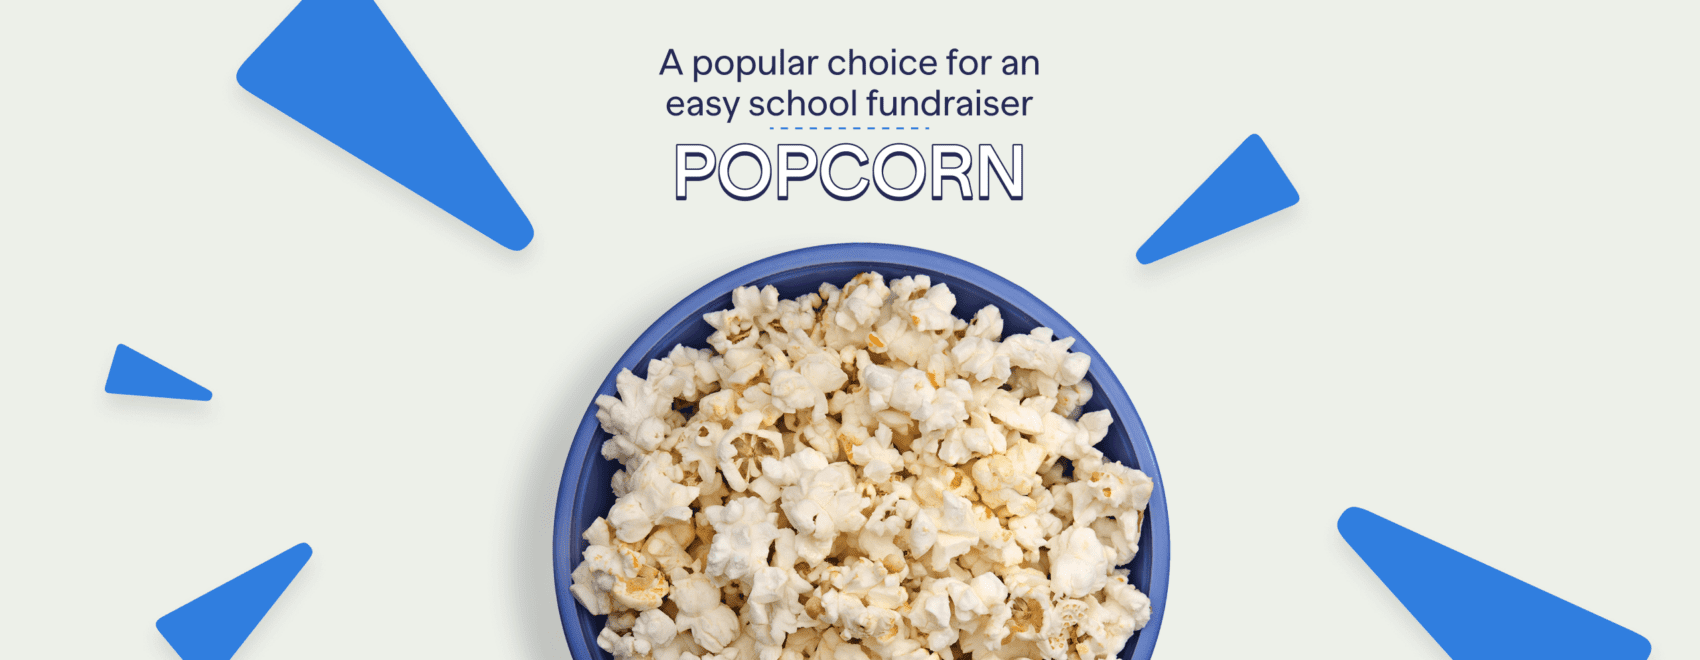 A popular choice for an easy school fundraiser Popcorn